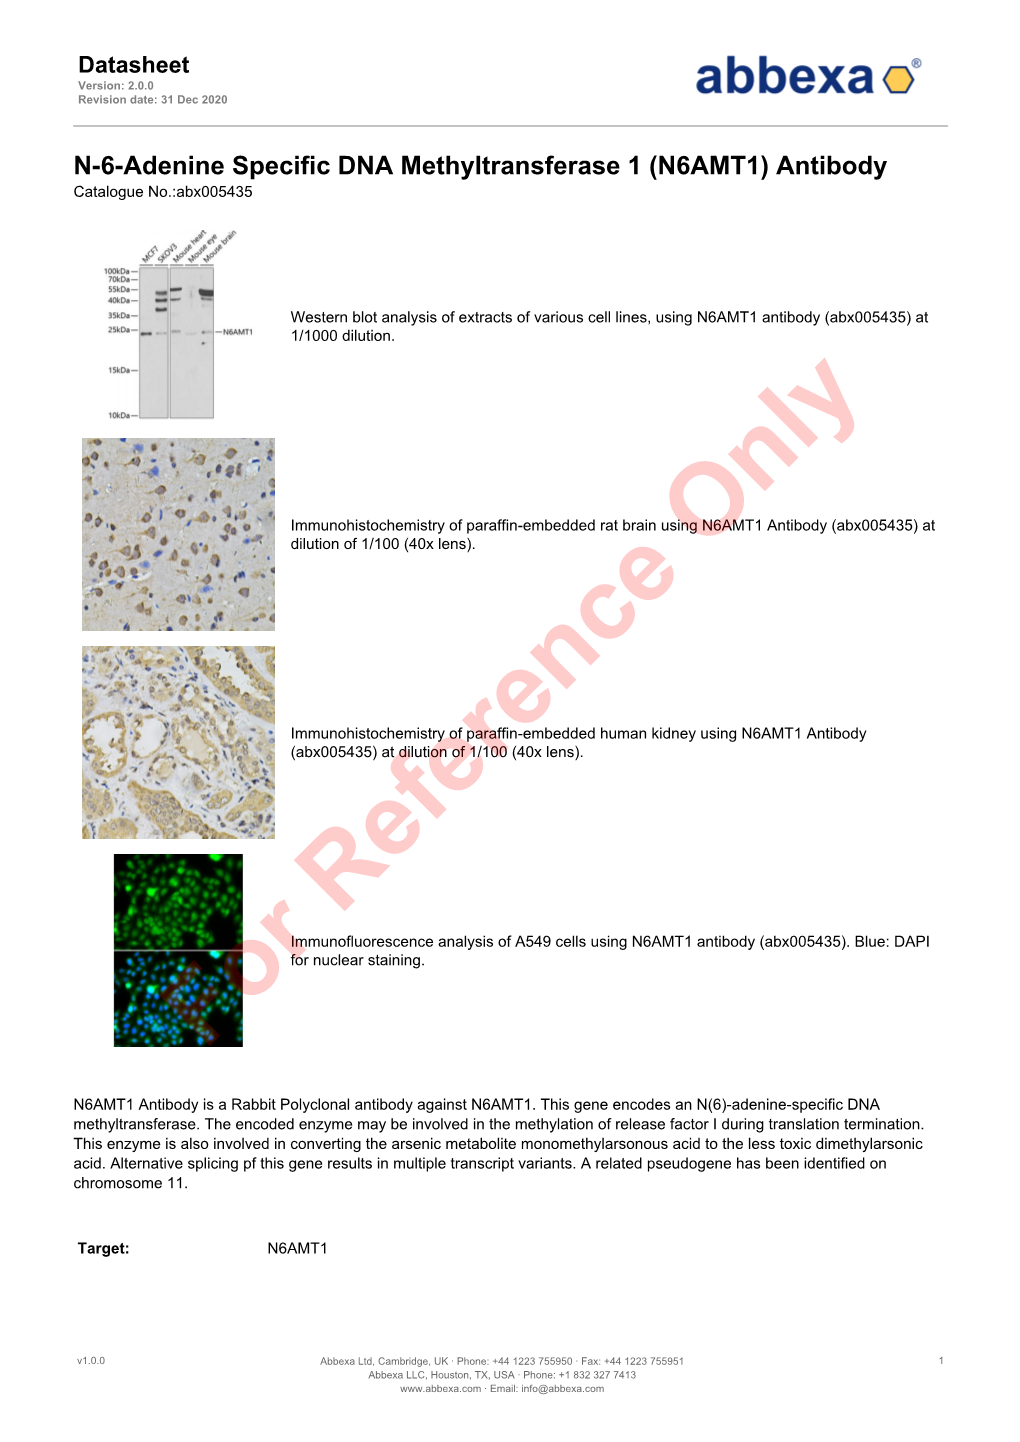 N6AMT1) Antibody Catalogue No.:Abx005435